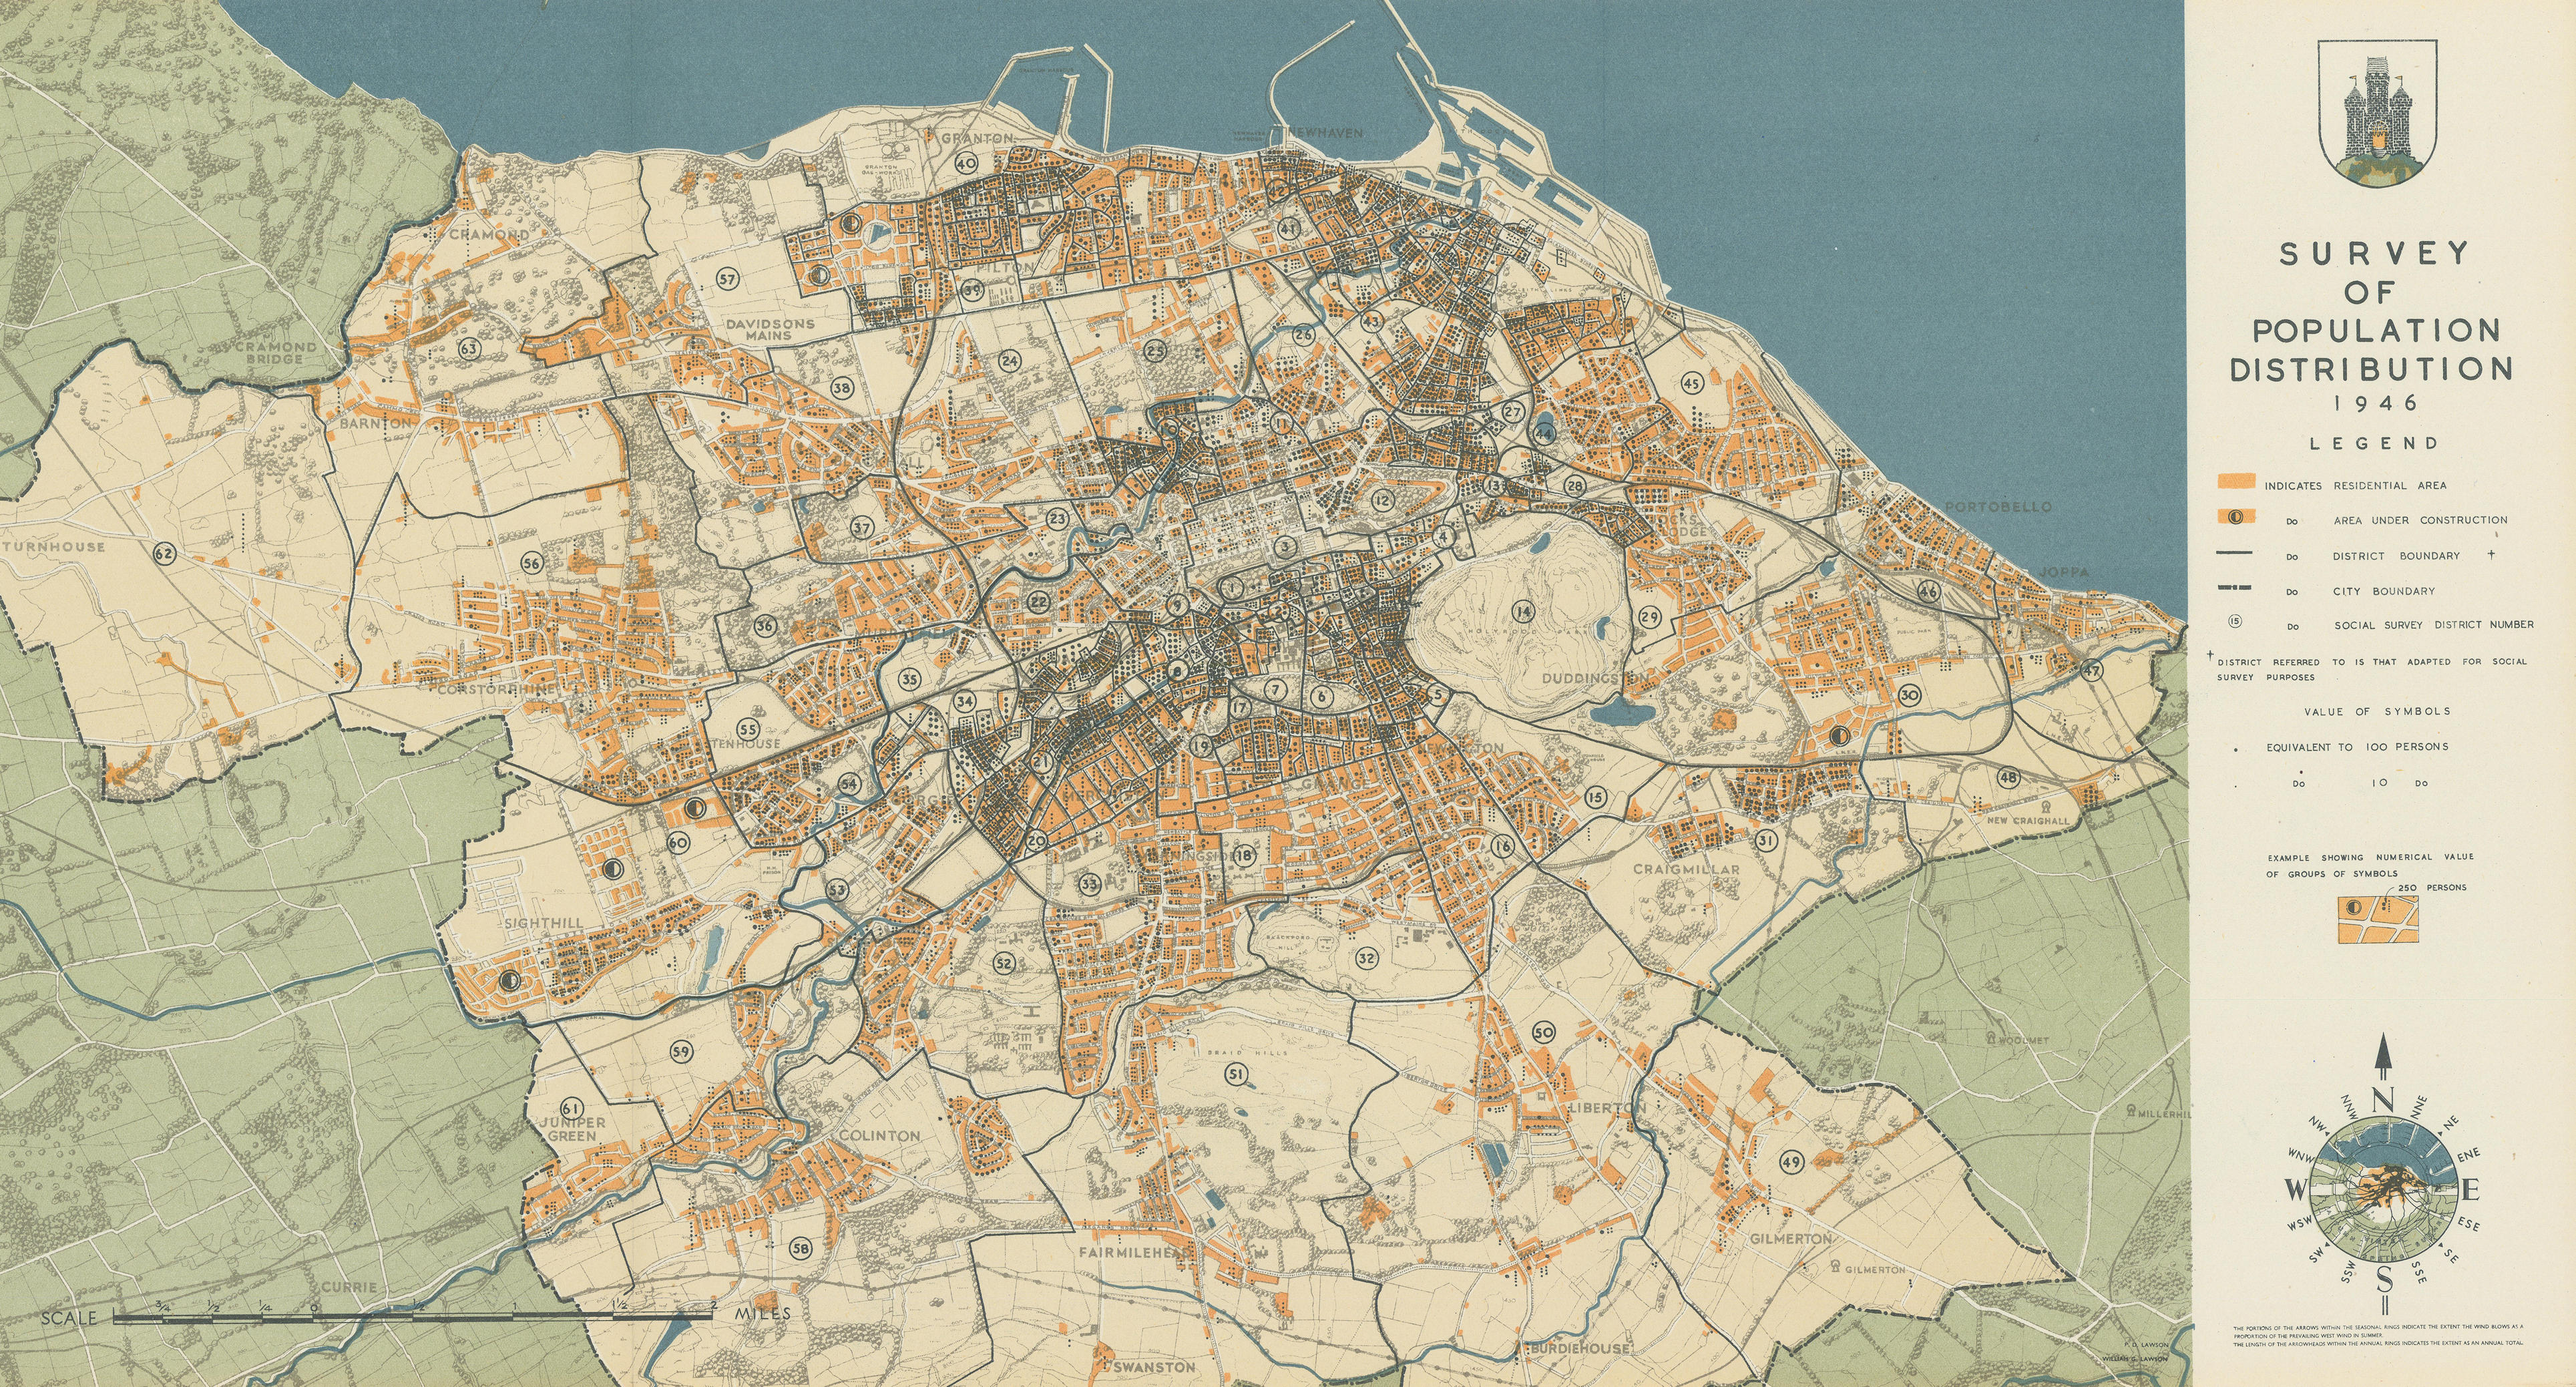 EDINBURGH. Survey of Population Distribution 1946. PATRICK ABERCROMBIE 1949 map